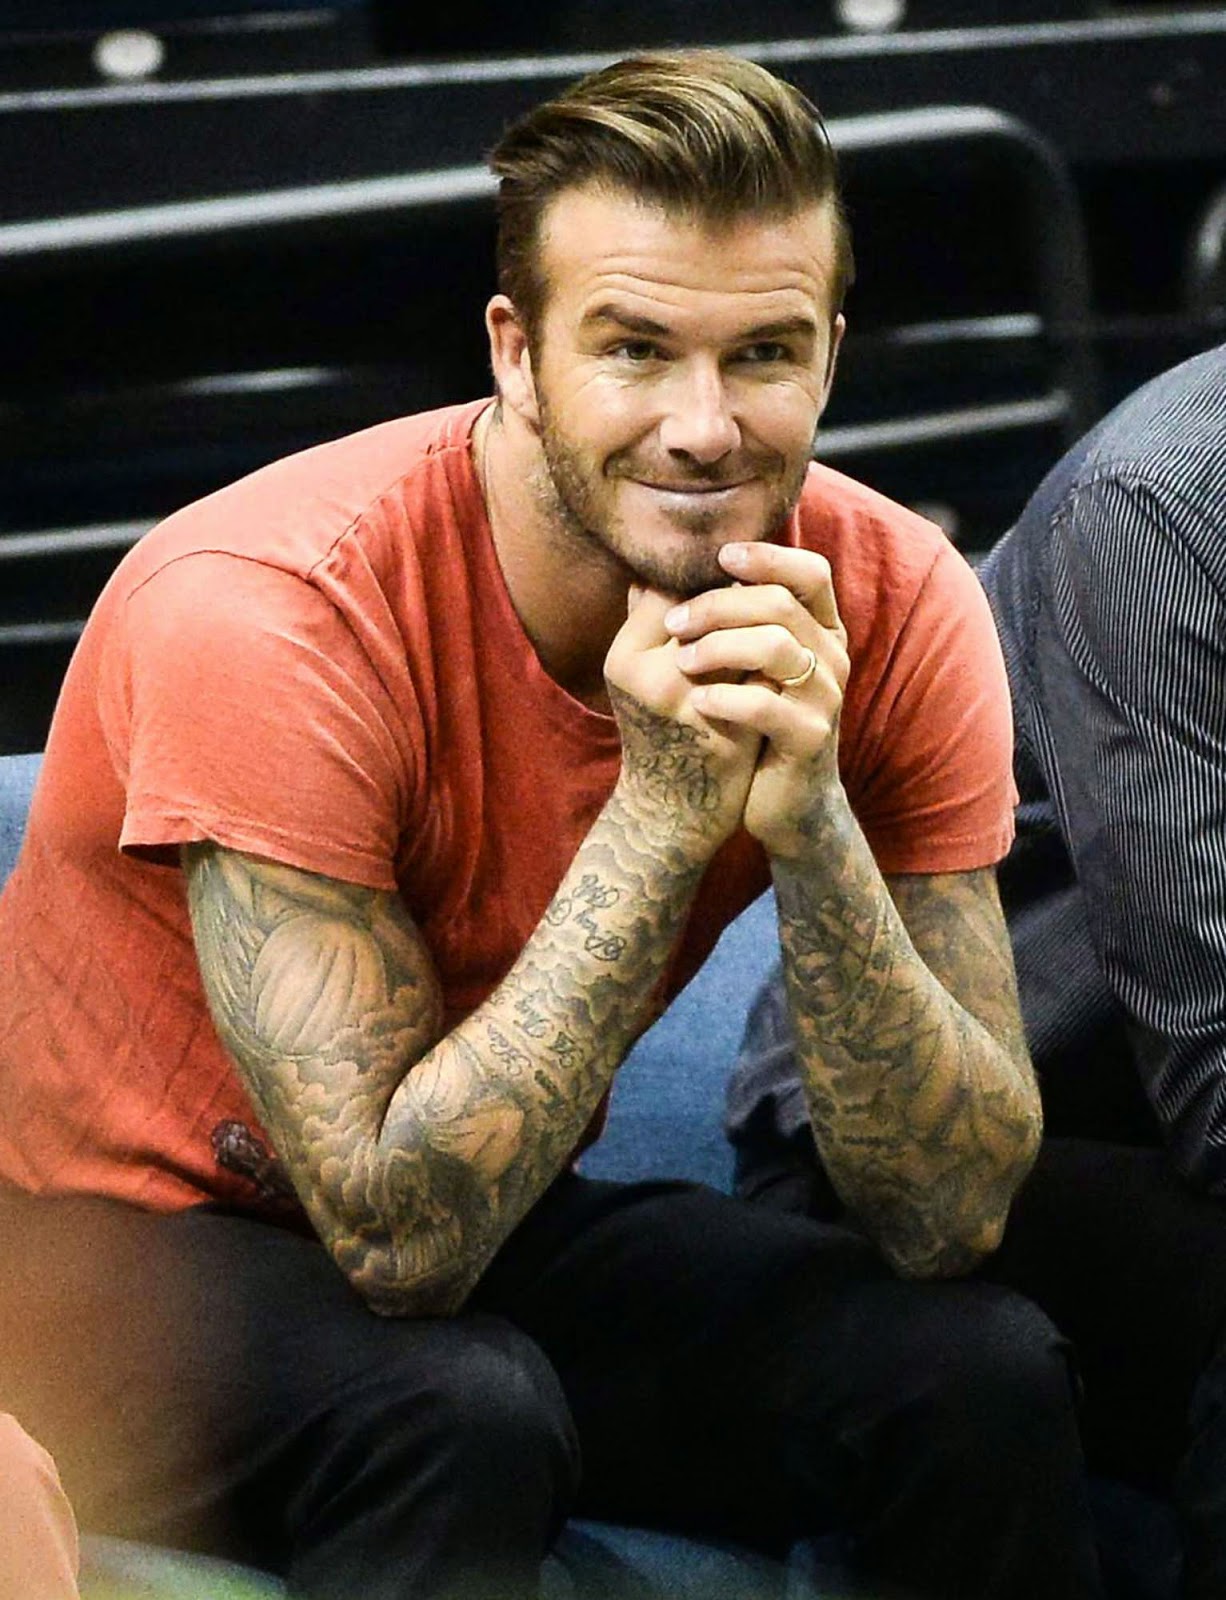  Model  Gaya Rambut  David  Beckham  Terbaru 2021 Collection 